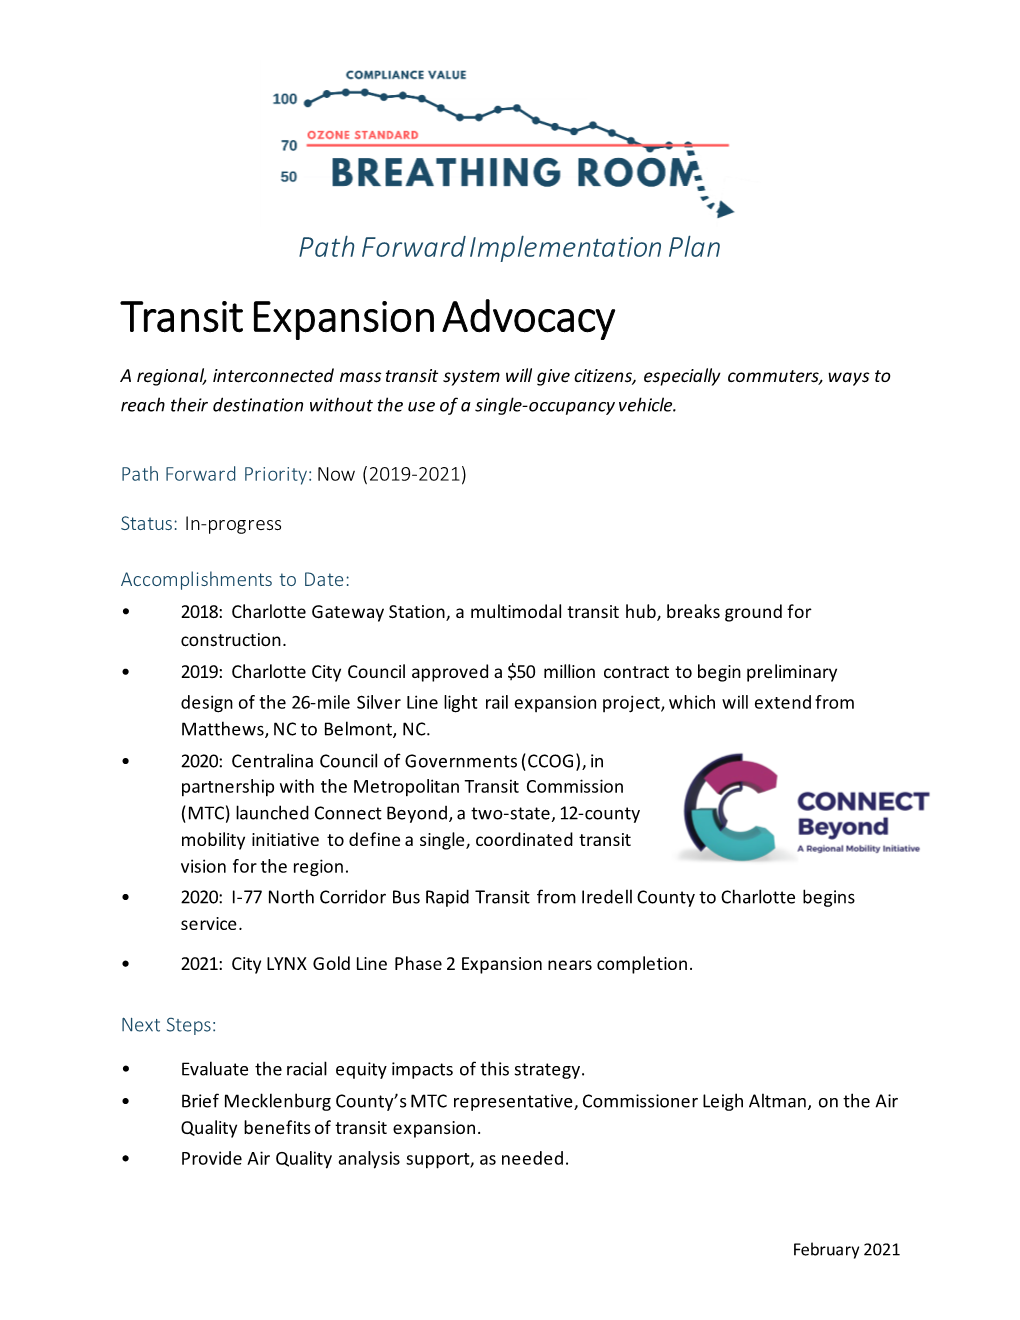 Transit Expansion Advocacy